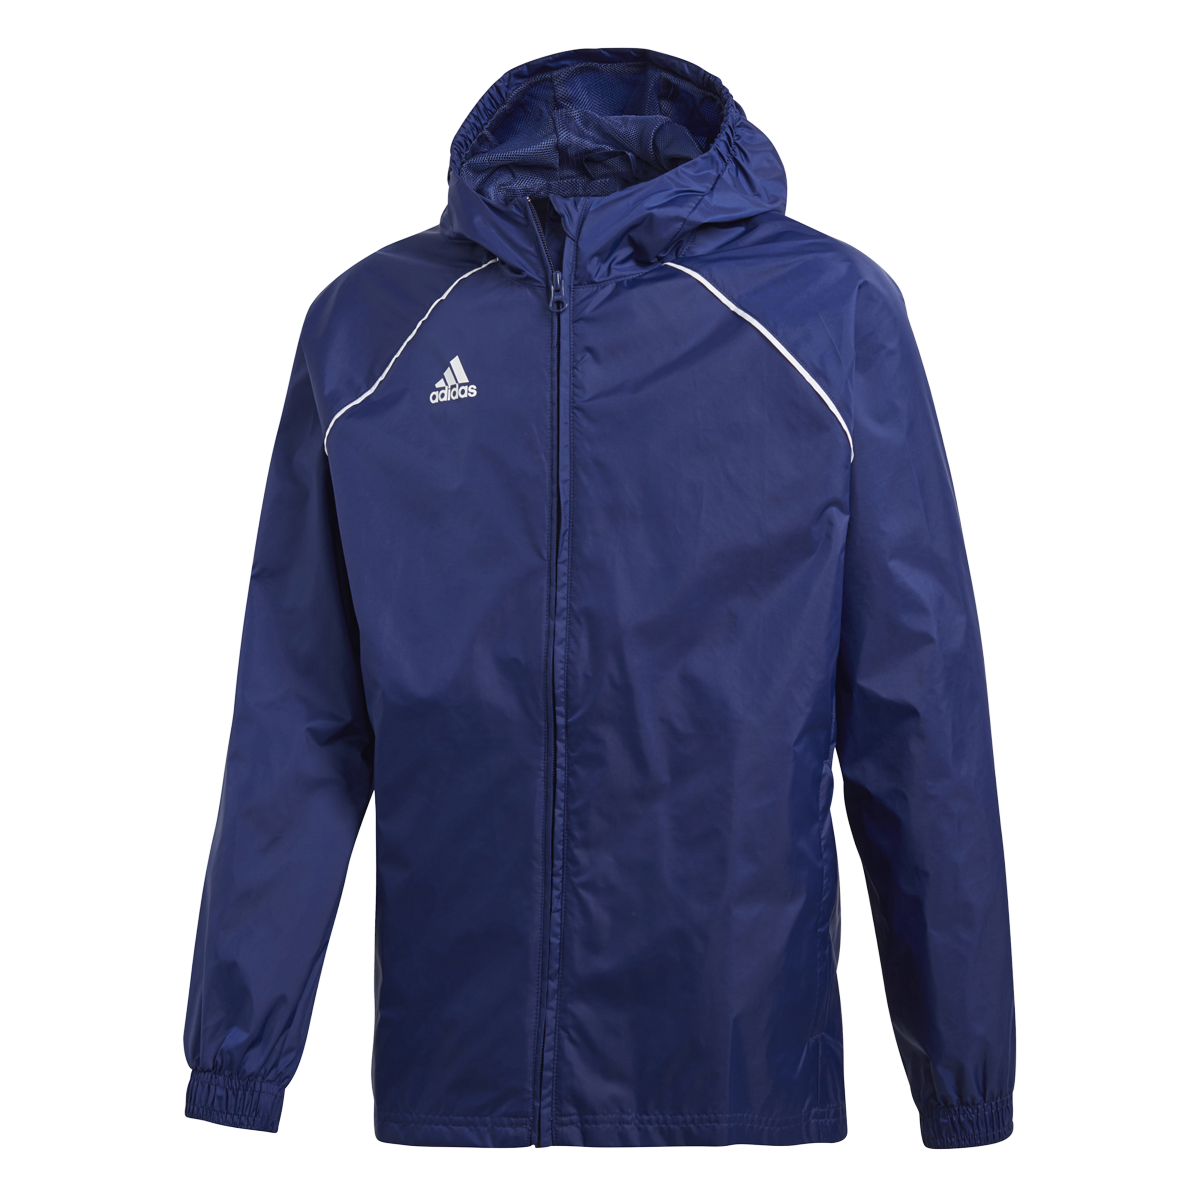 Adidas Core 18 Rain Jacket tmavě modrá UK Junior XS Dětské